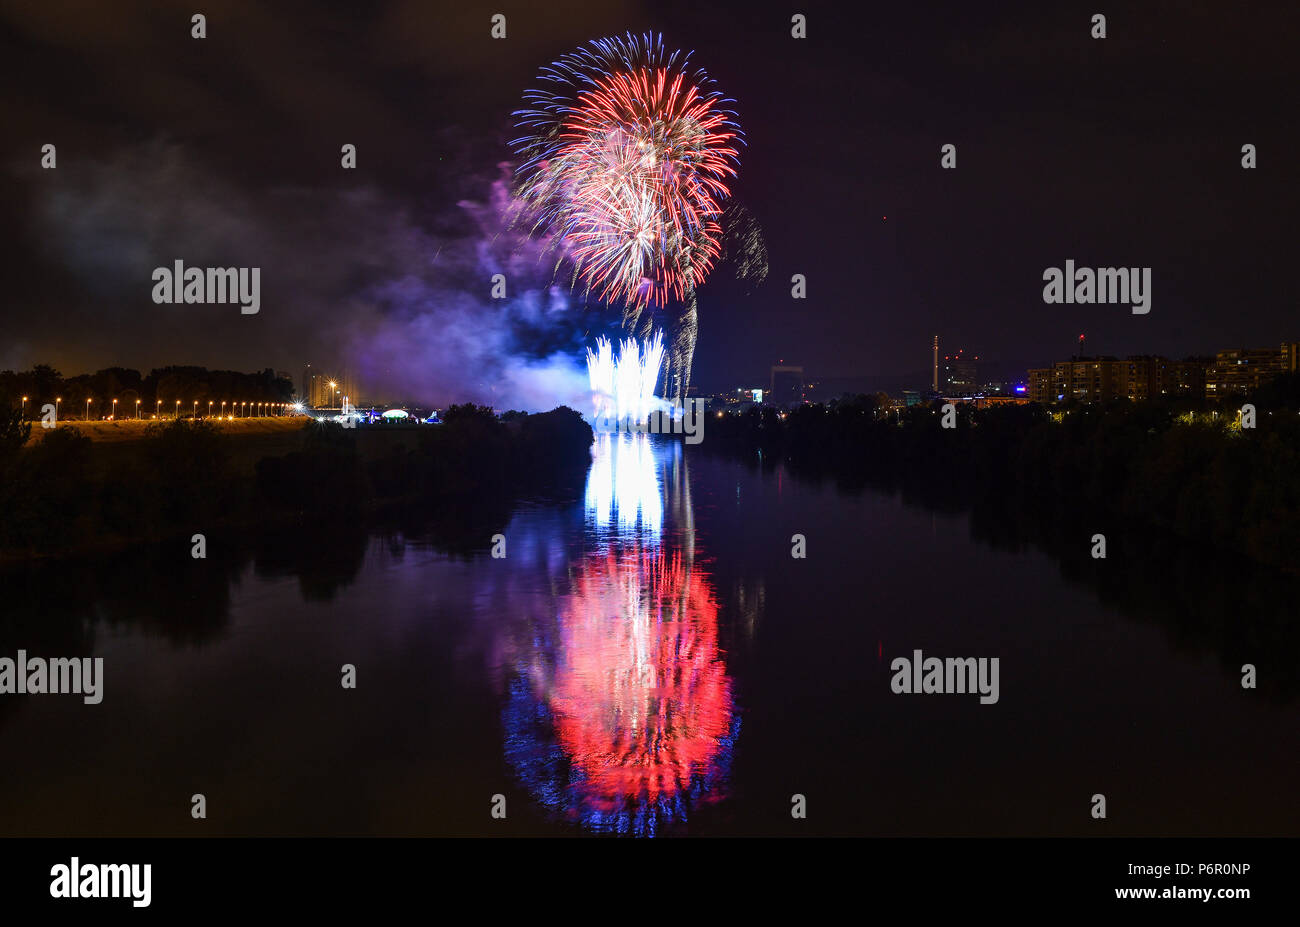 (180702) -- ZAGREB, July 2, 2018 (Xinhua) -- Fireworks light up the sky during the 18th International Fireworks Festival at Bundek Lake in Zagreb, Croatia, on July 1, 2018. (Xinhua/Sandra Simunovic) (jmmn) Stock Photo